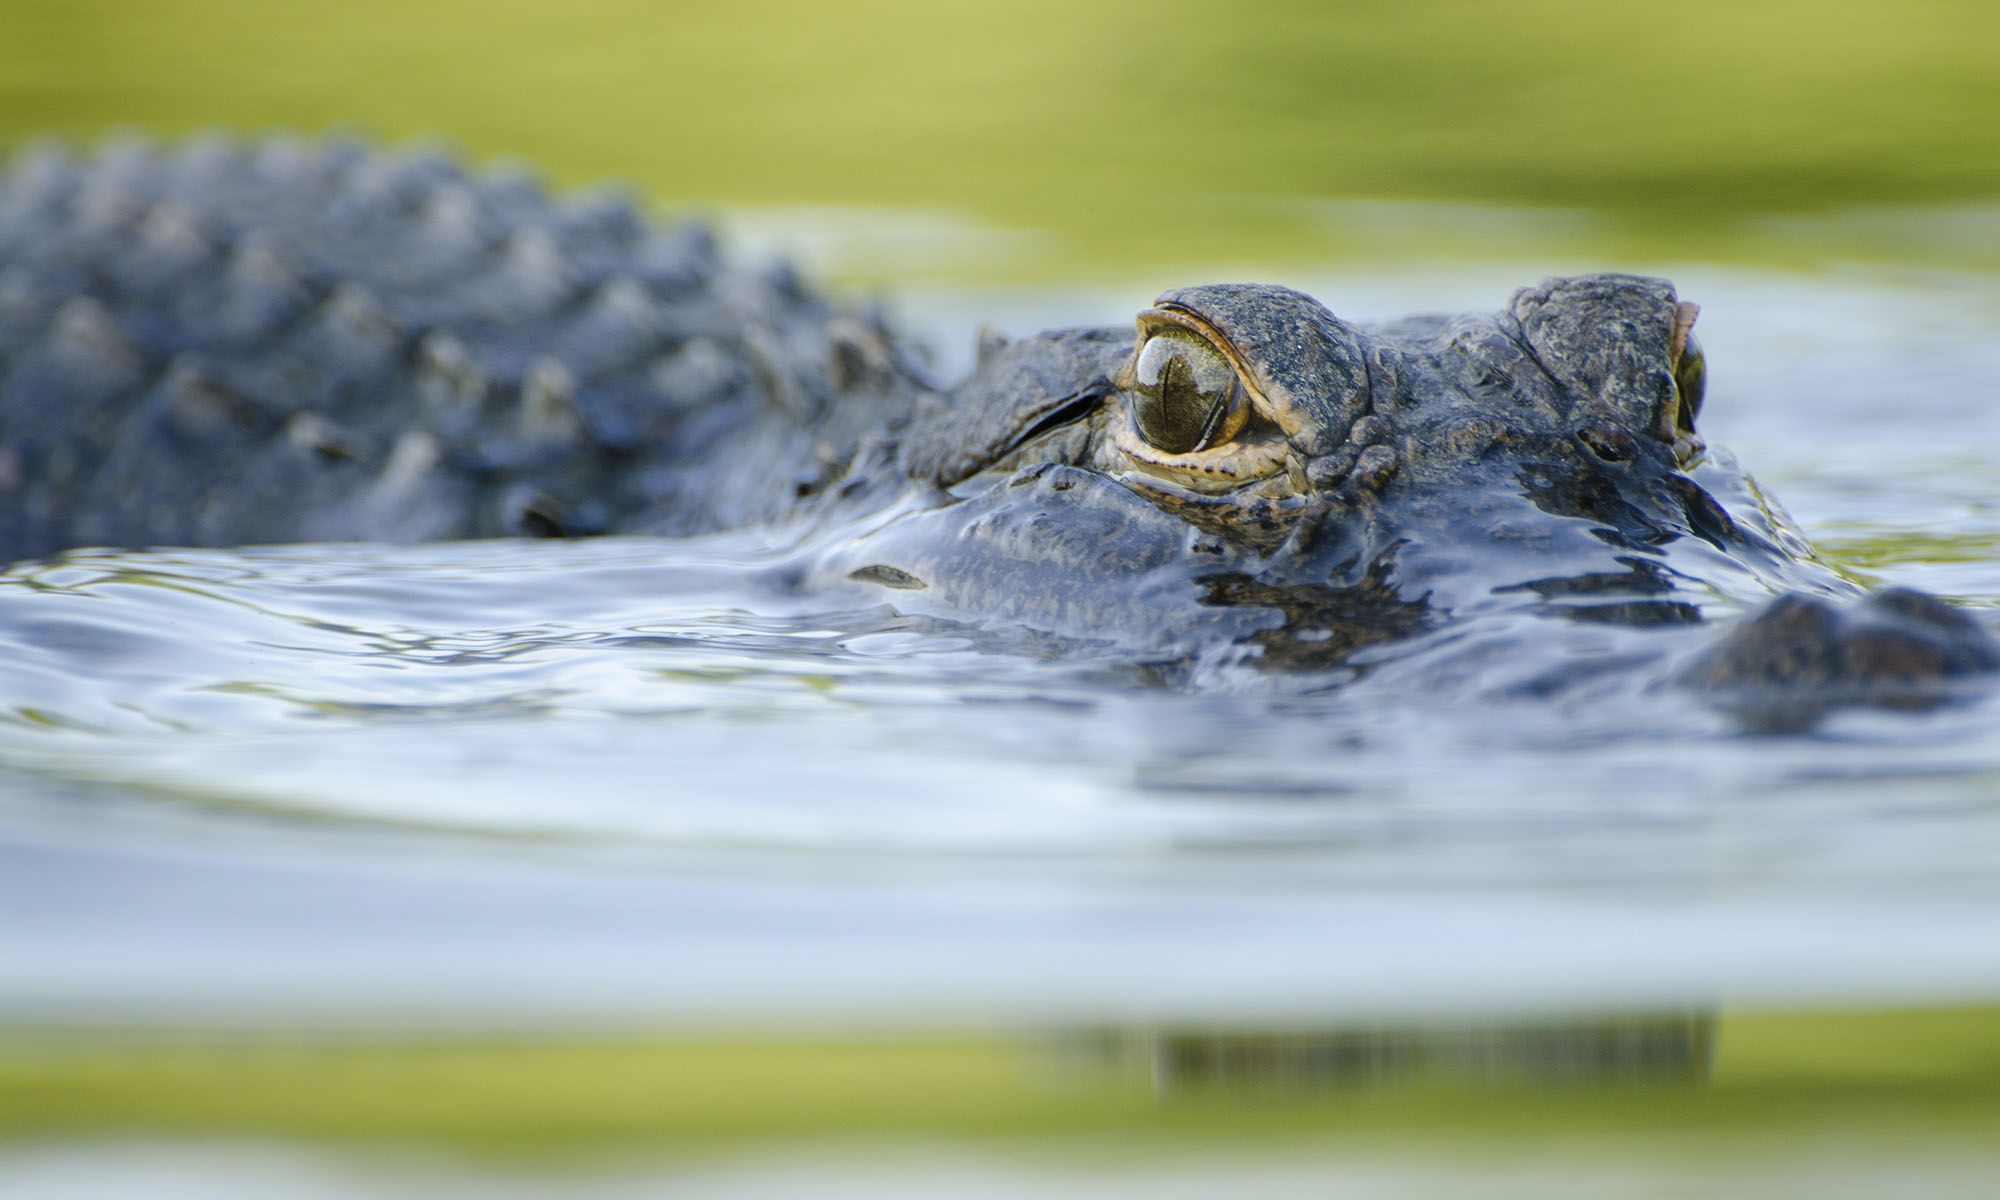 Closeup of swimming alligator